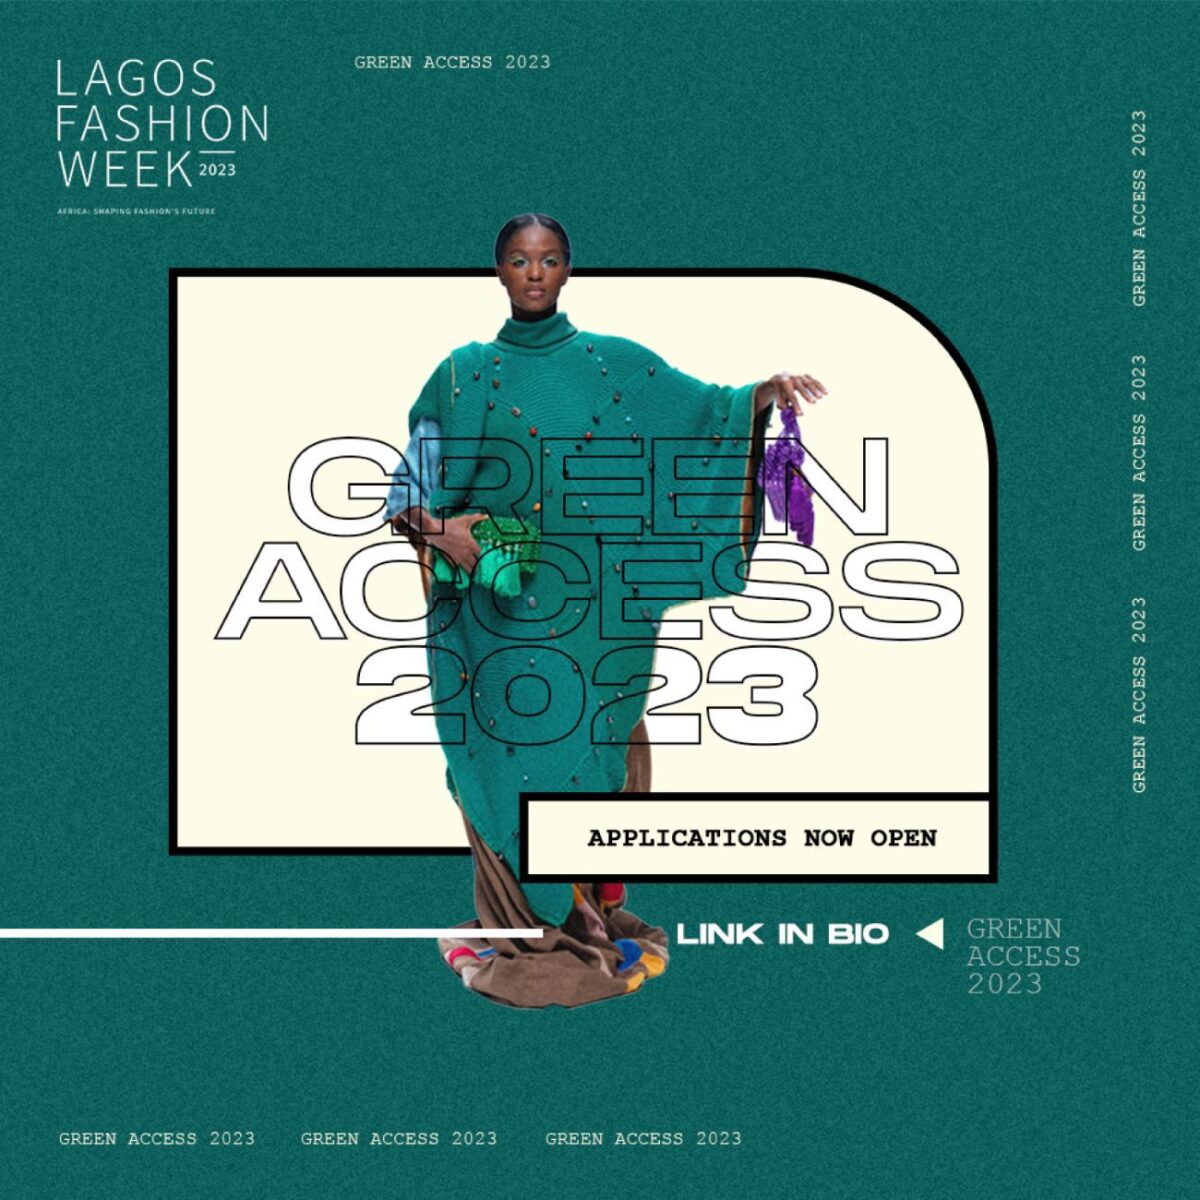 Lagos Fashion Week Green Access 2023